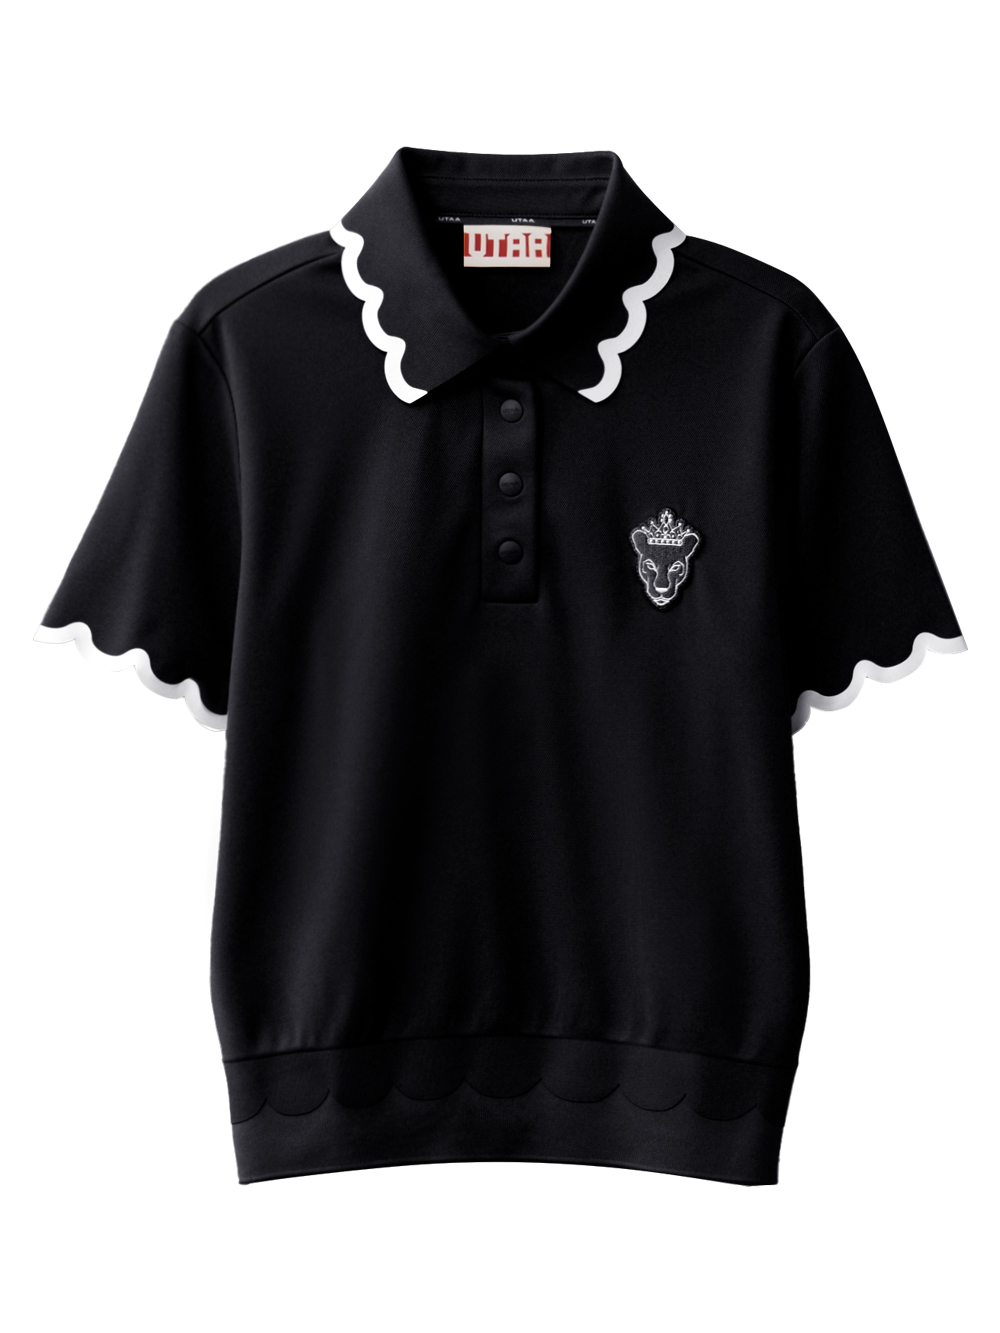 UTAA Tilde Wave Crown Panther T-Shirt : Black  (UC3STF260BK)